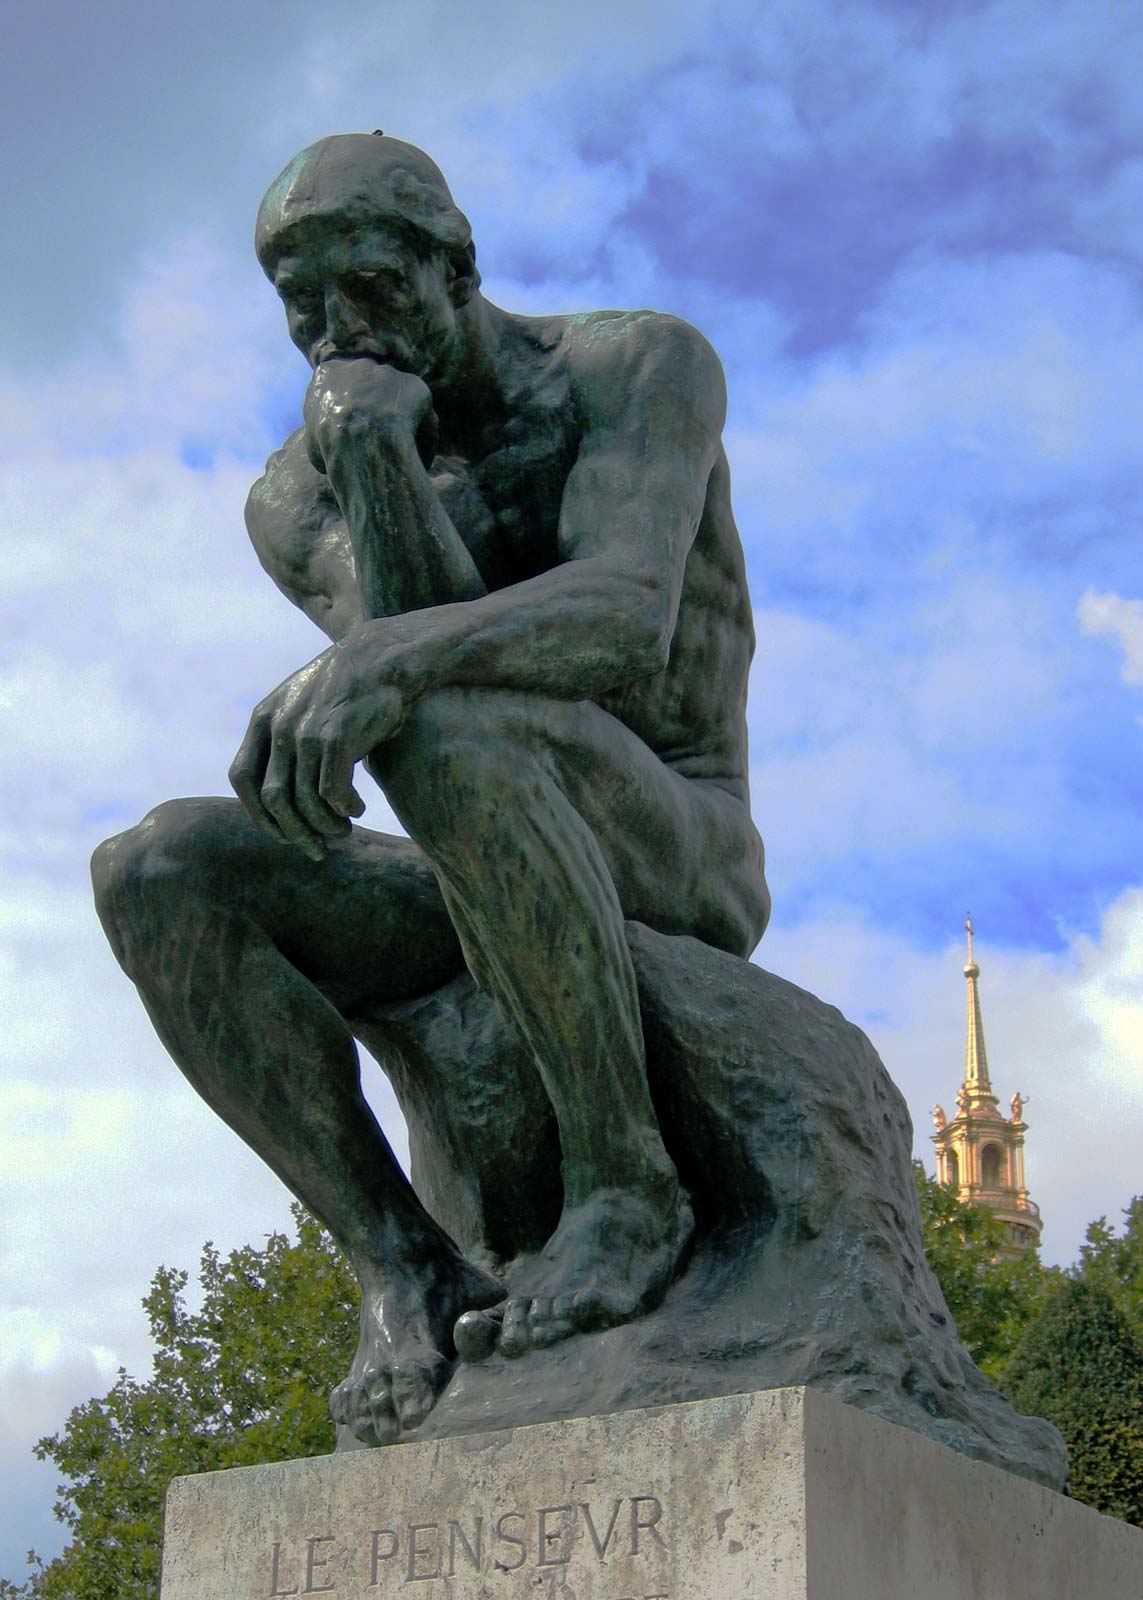 Image iof Rodins sculpture The Thinker